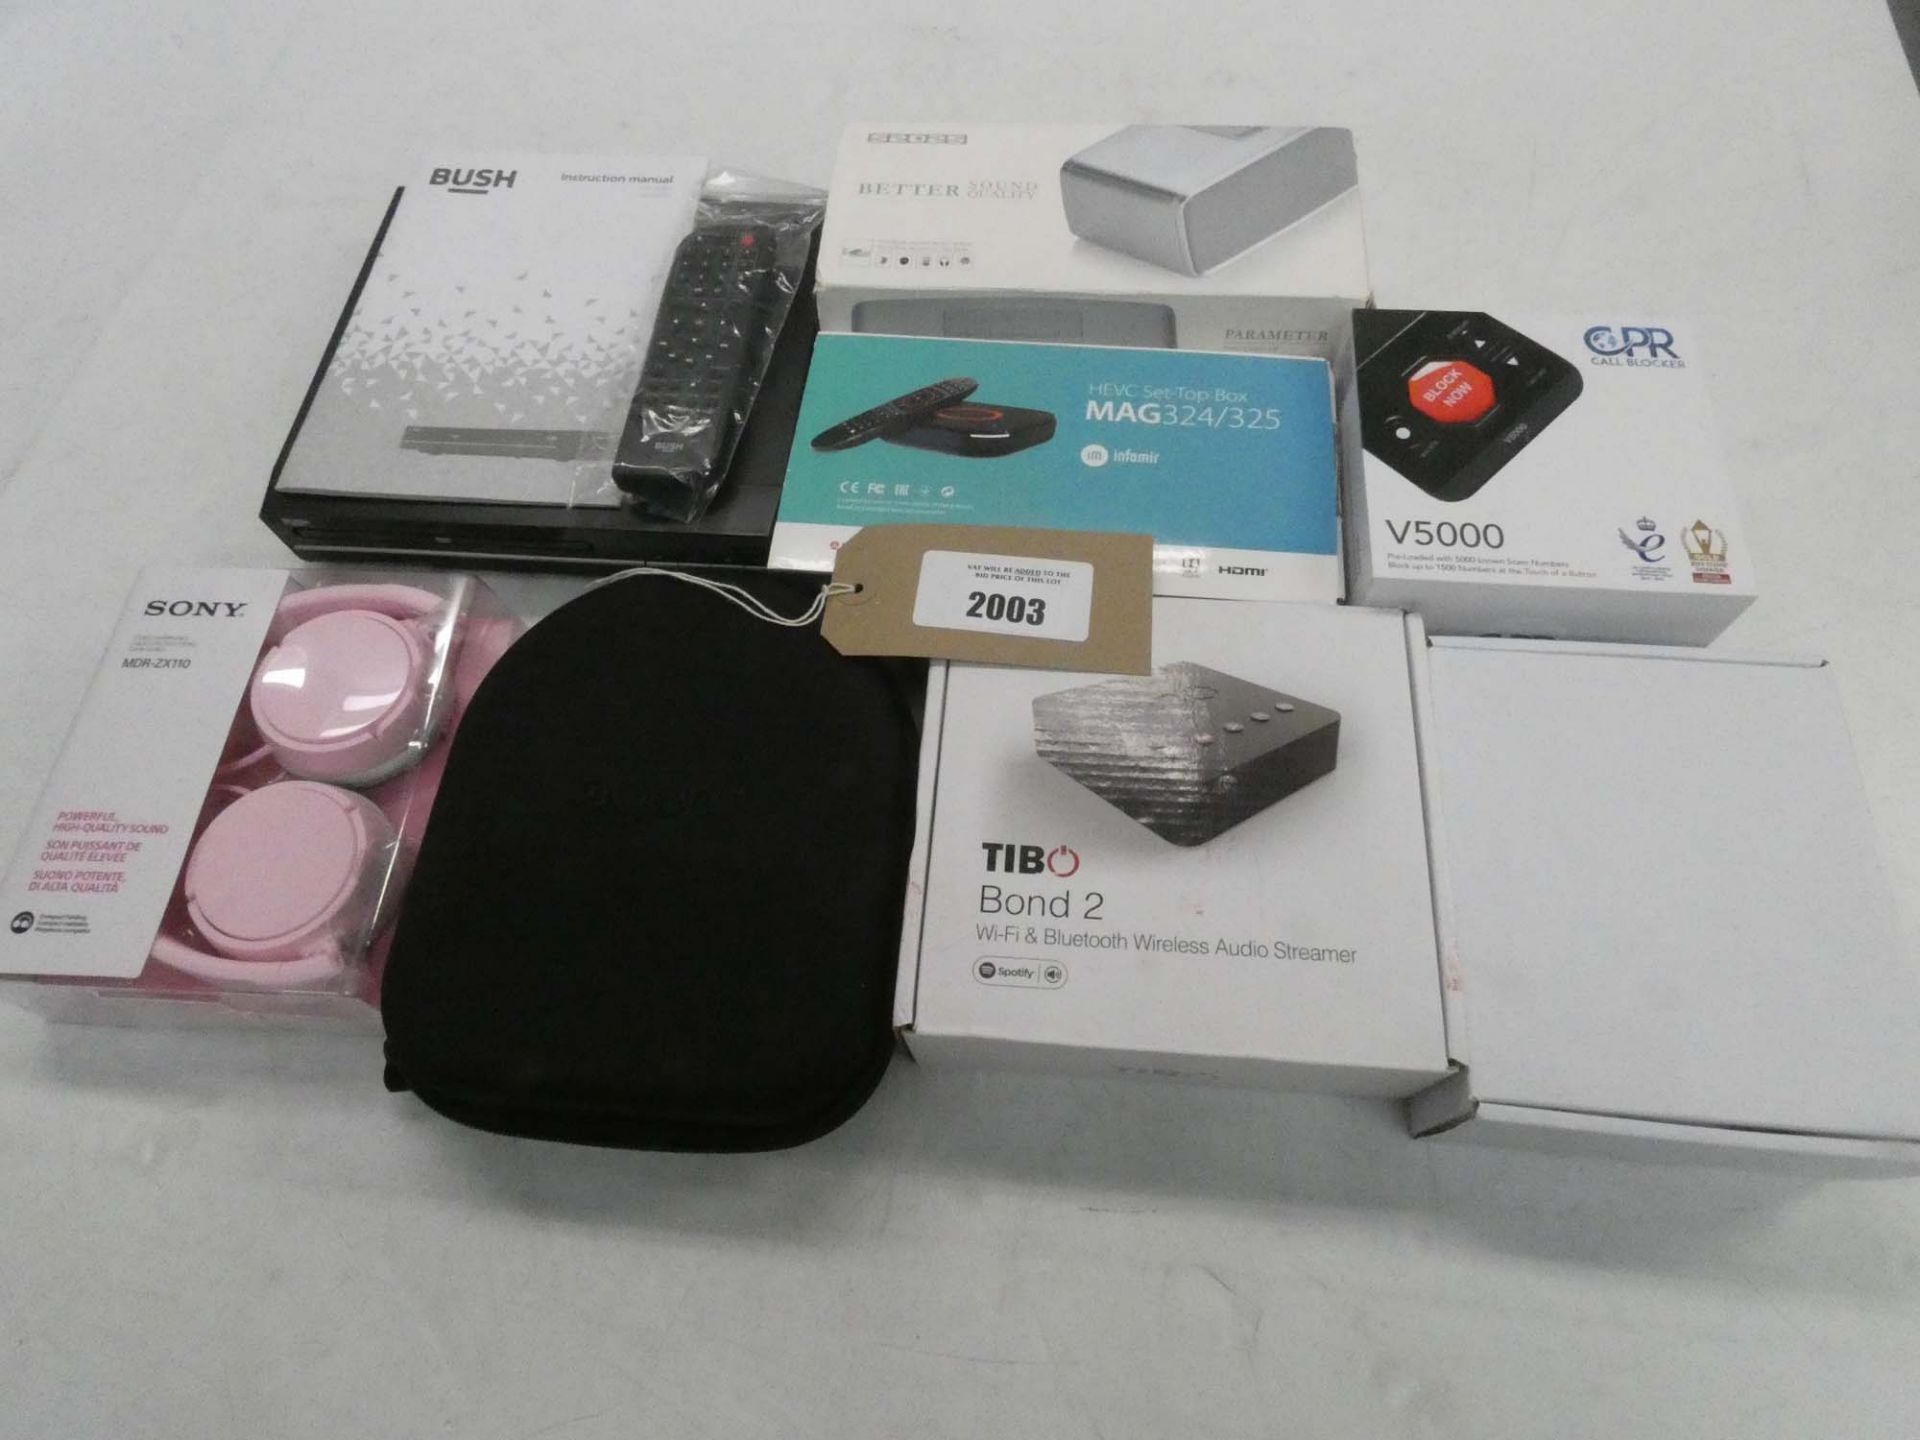 Bag containing Bush DVD player, Sony headphones, headset, bluetooth speaker, Tibo audio streamer,